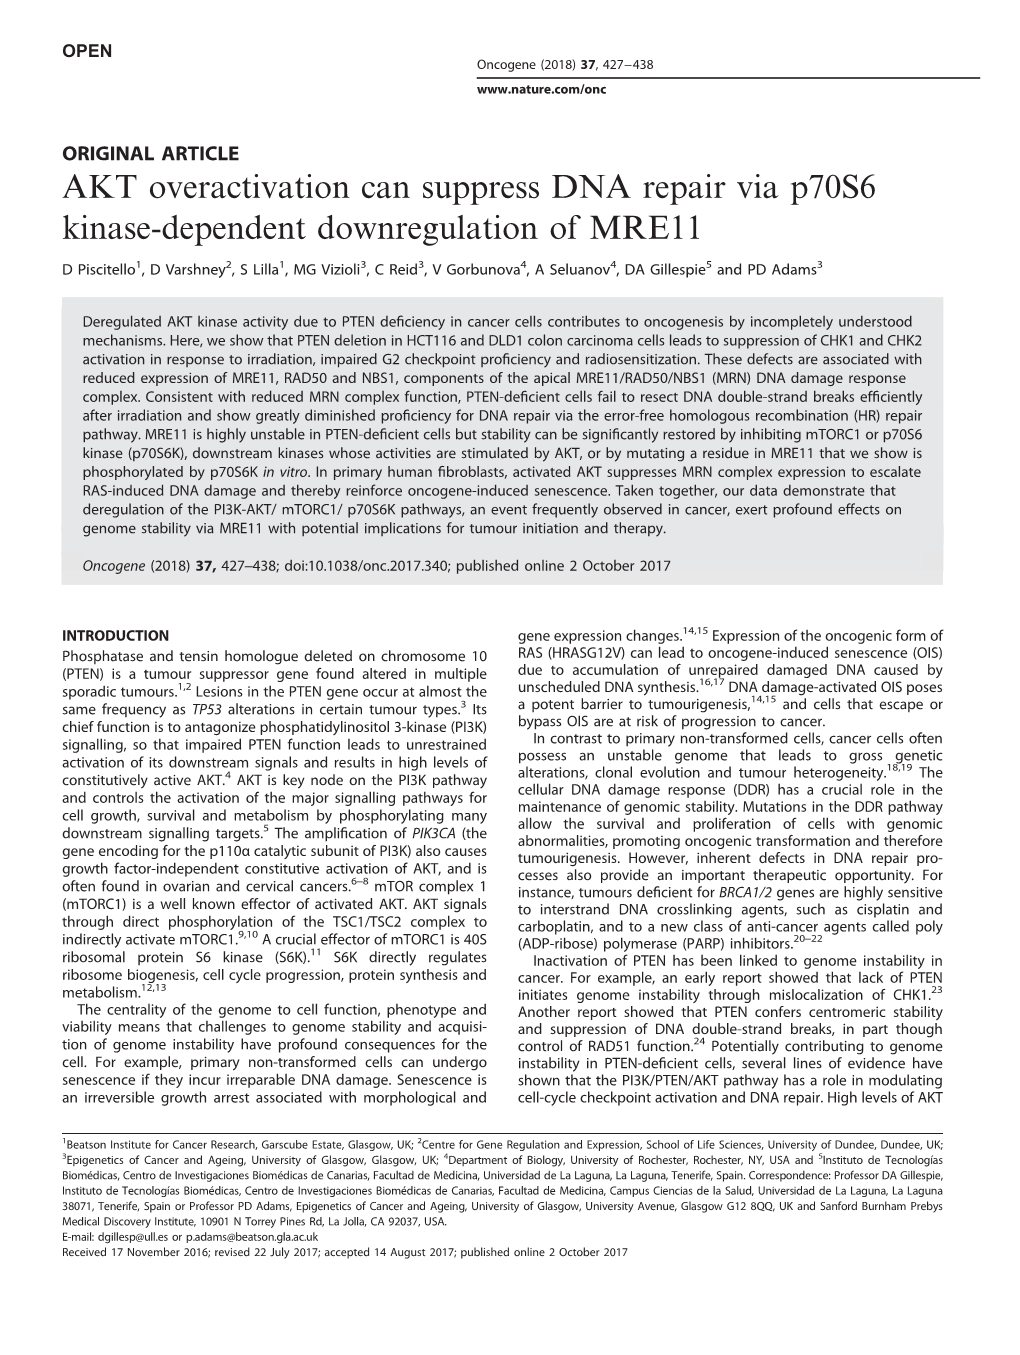 AKT Overactivation Can Suppress DNA Repair Via P70s6 Kinase-Dependent Downregulation of MRE11